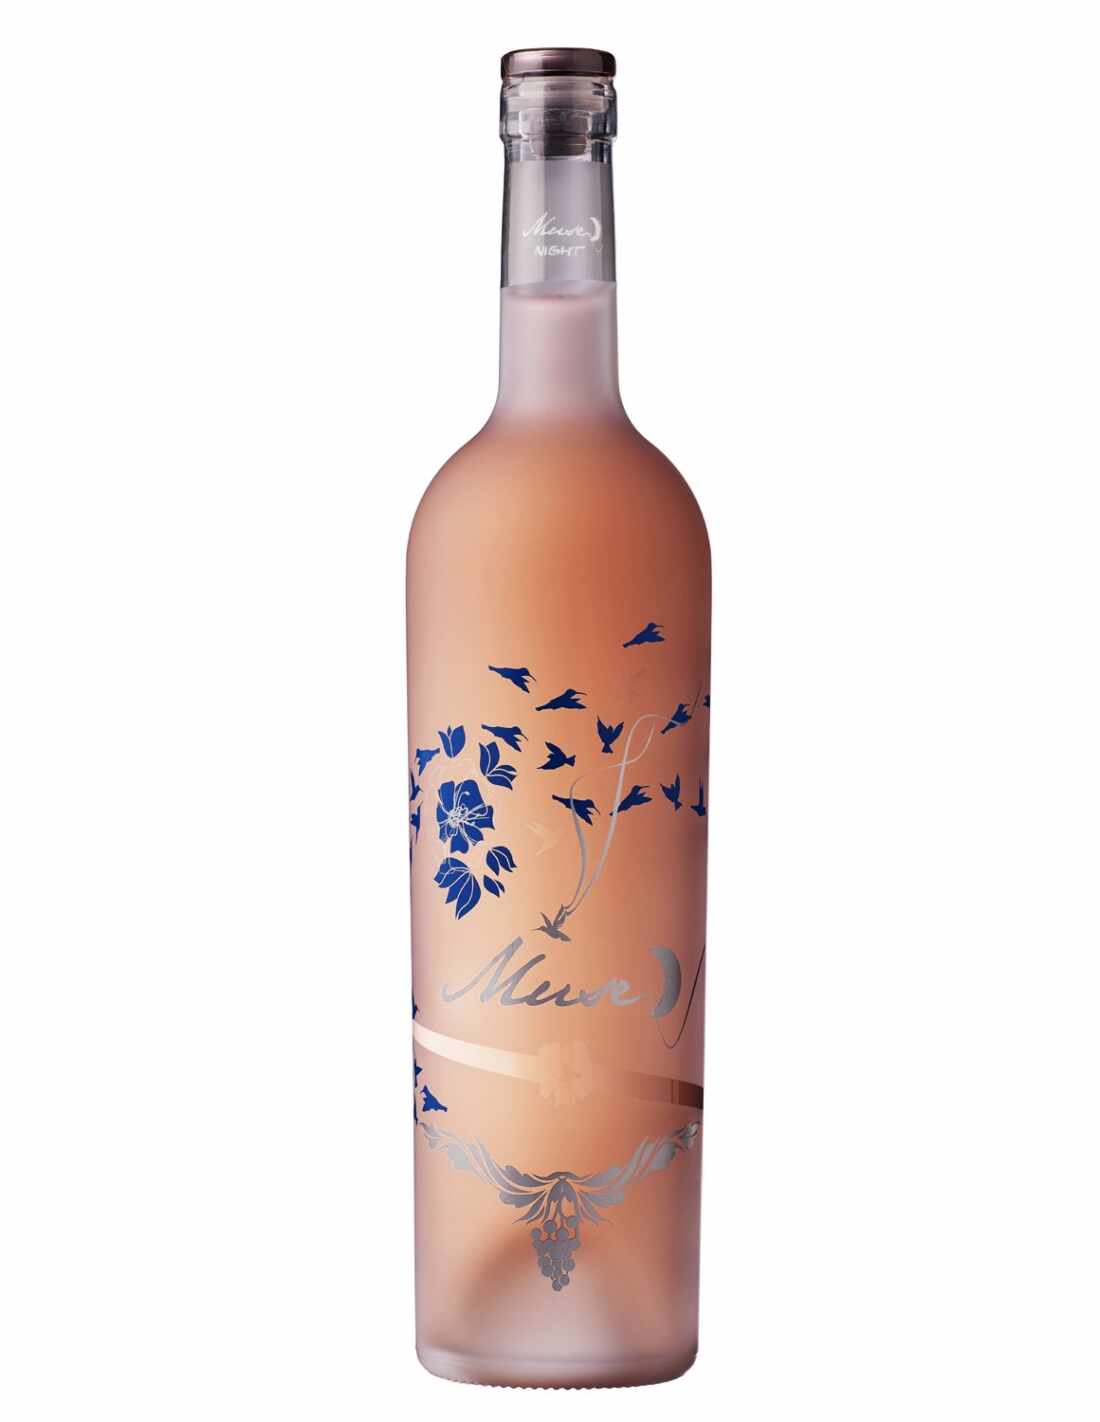 Vin roze demisec Muse Night Recas, 0.75L, 11.5% alc., Romania